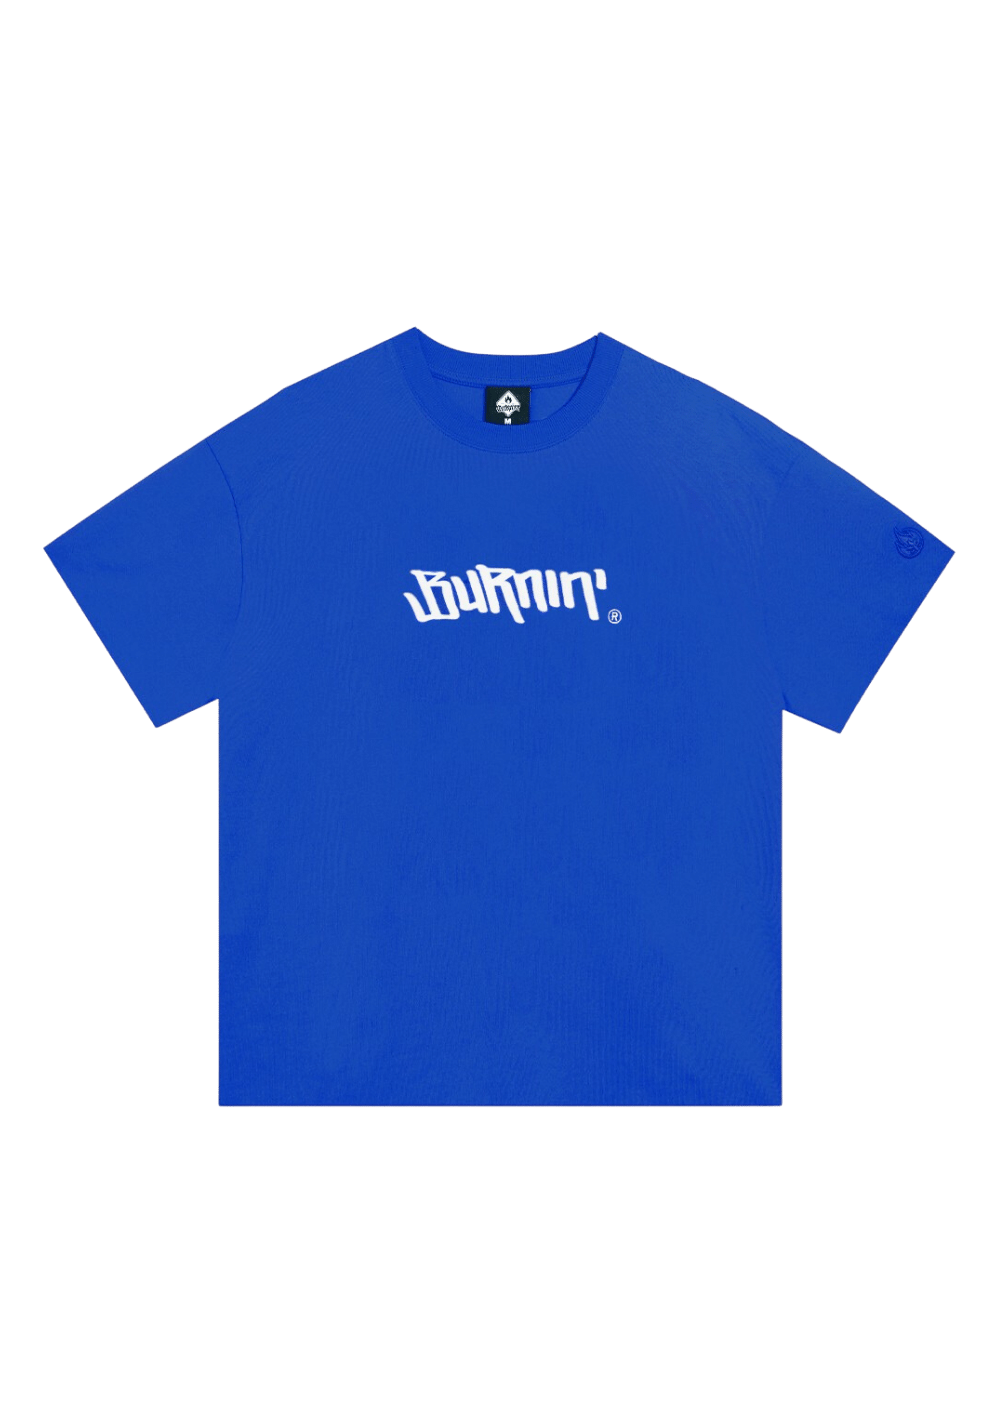 Horizontal Logo Oversized T-Shirt-Blue - PSYLOS 1, Horizontal Logo Oversized T-Shirt-Blue, T-Shirt, Burnin, PSYLOS 1